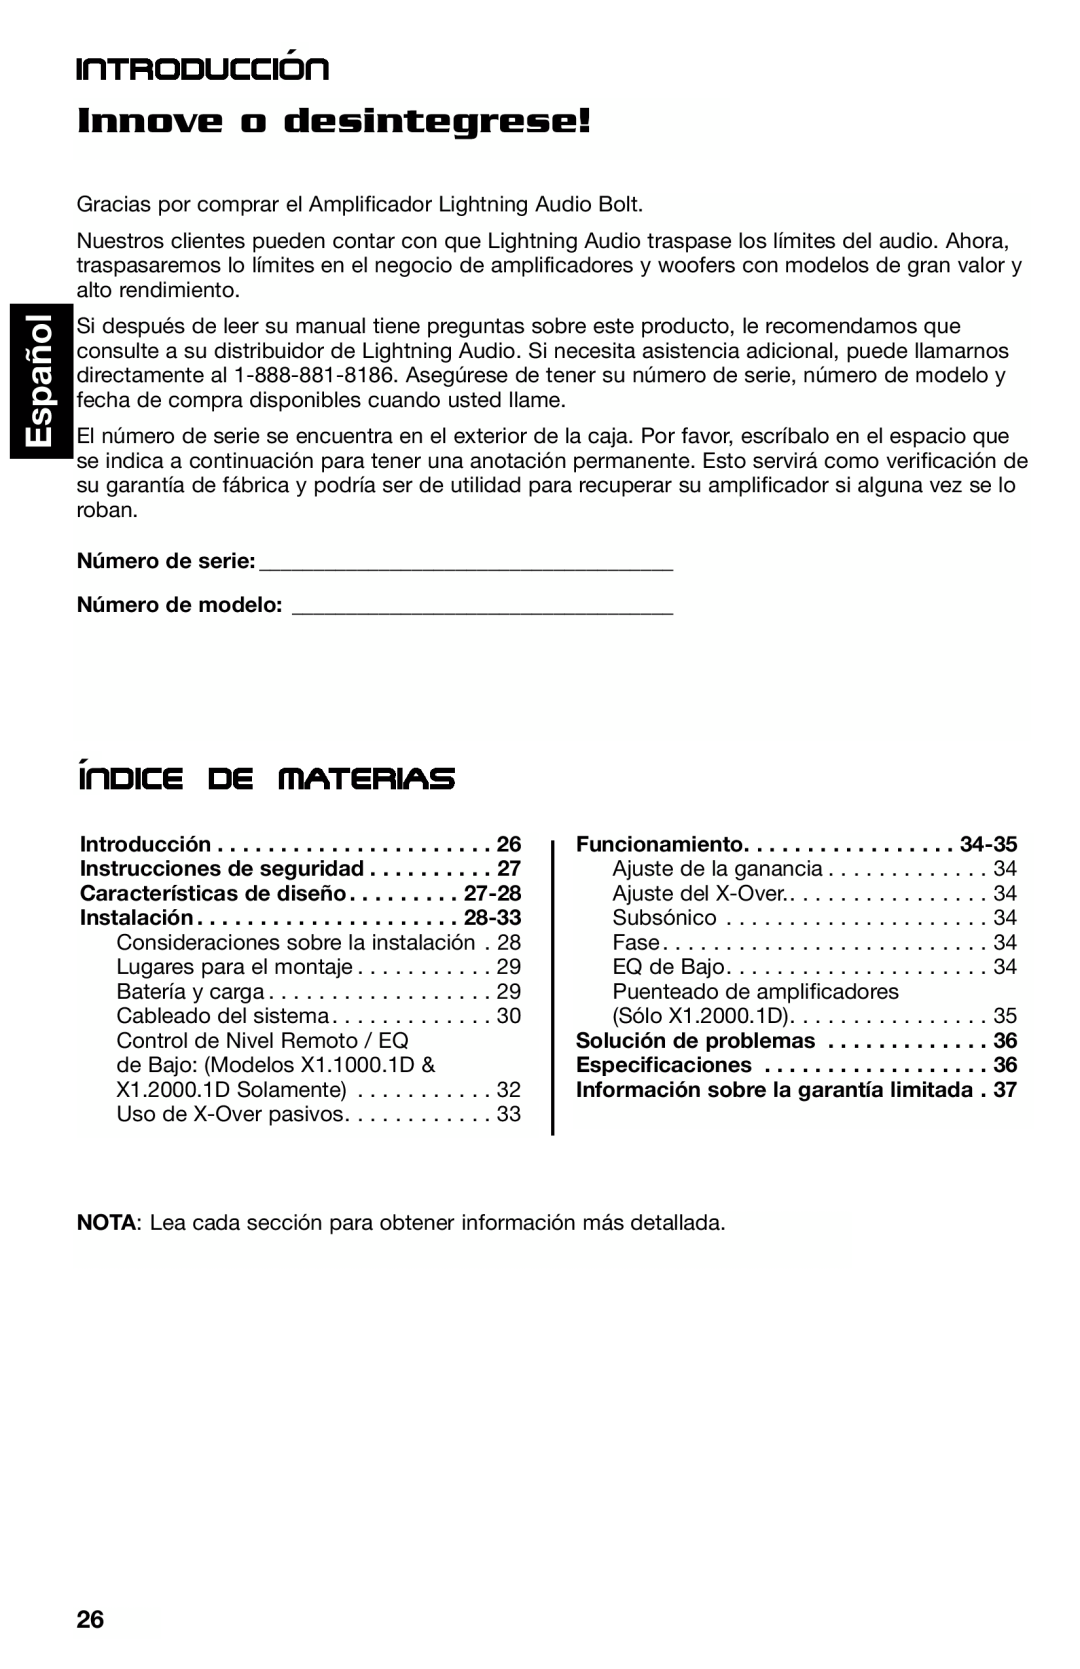 Lightning Audio X1.2000.1D, X1.800.4, X1.400.2 manual Innove o desintegrese, Español, Introduccion´, ´indice de materias 